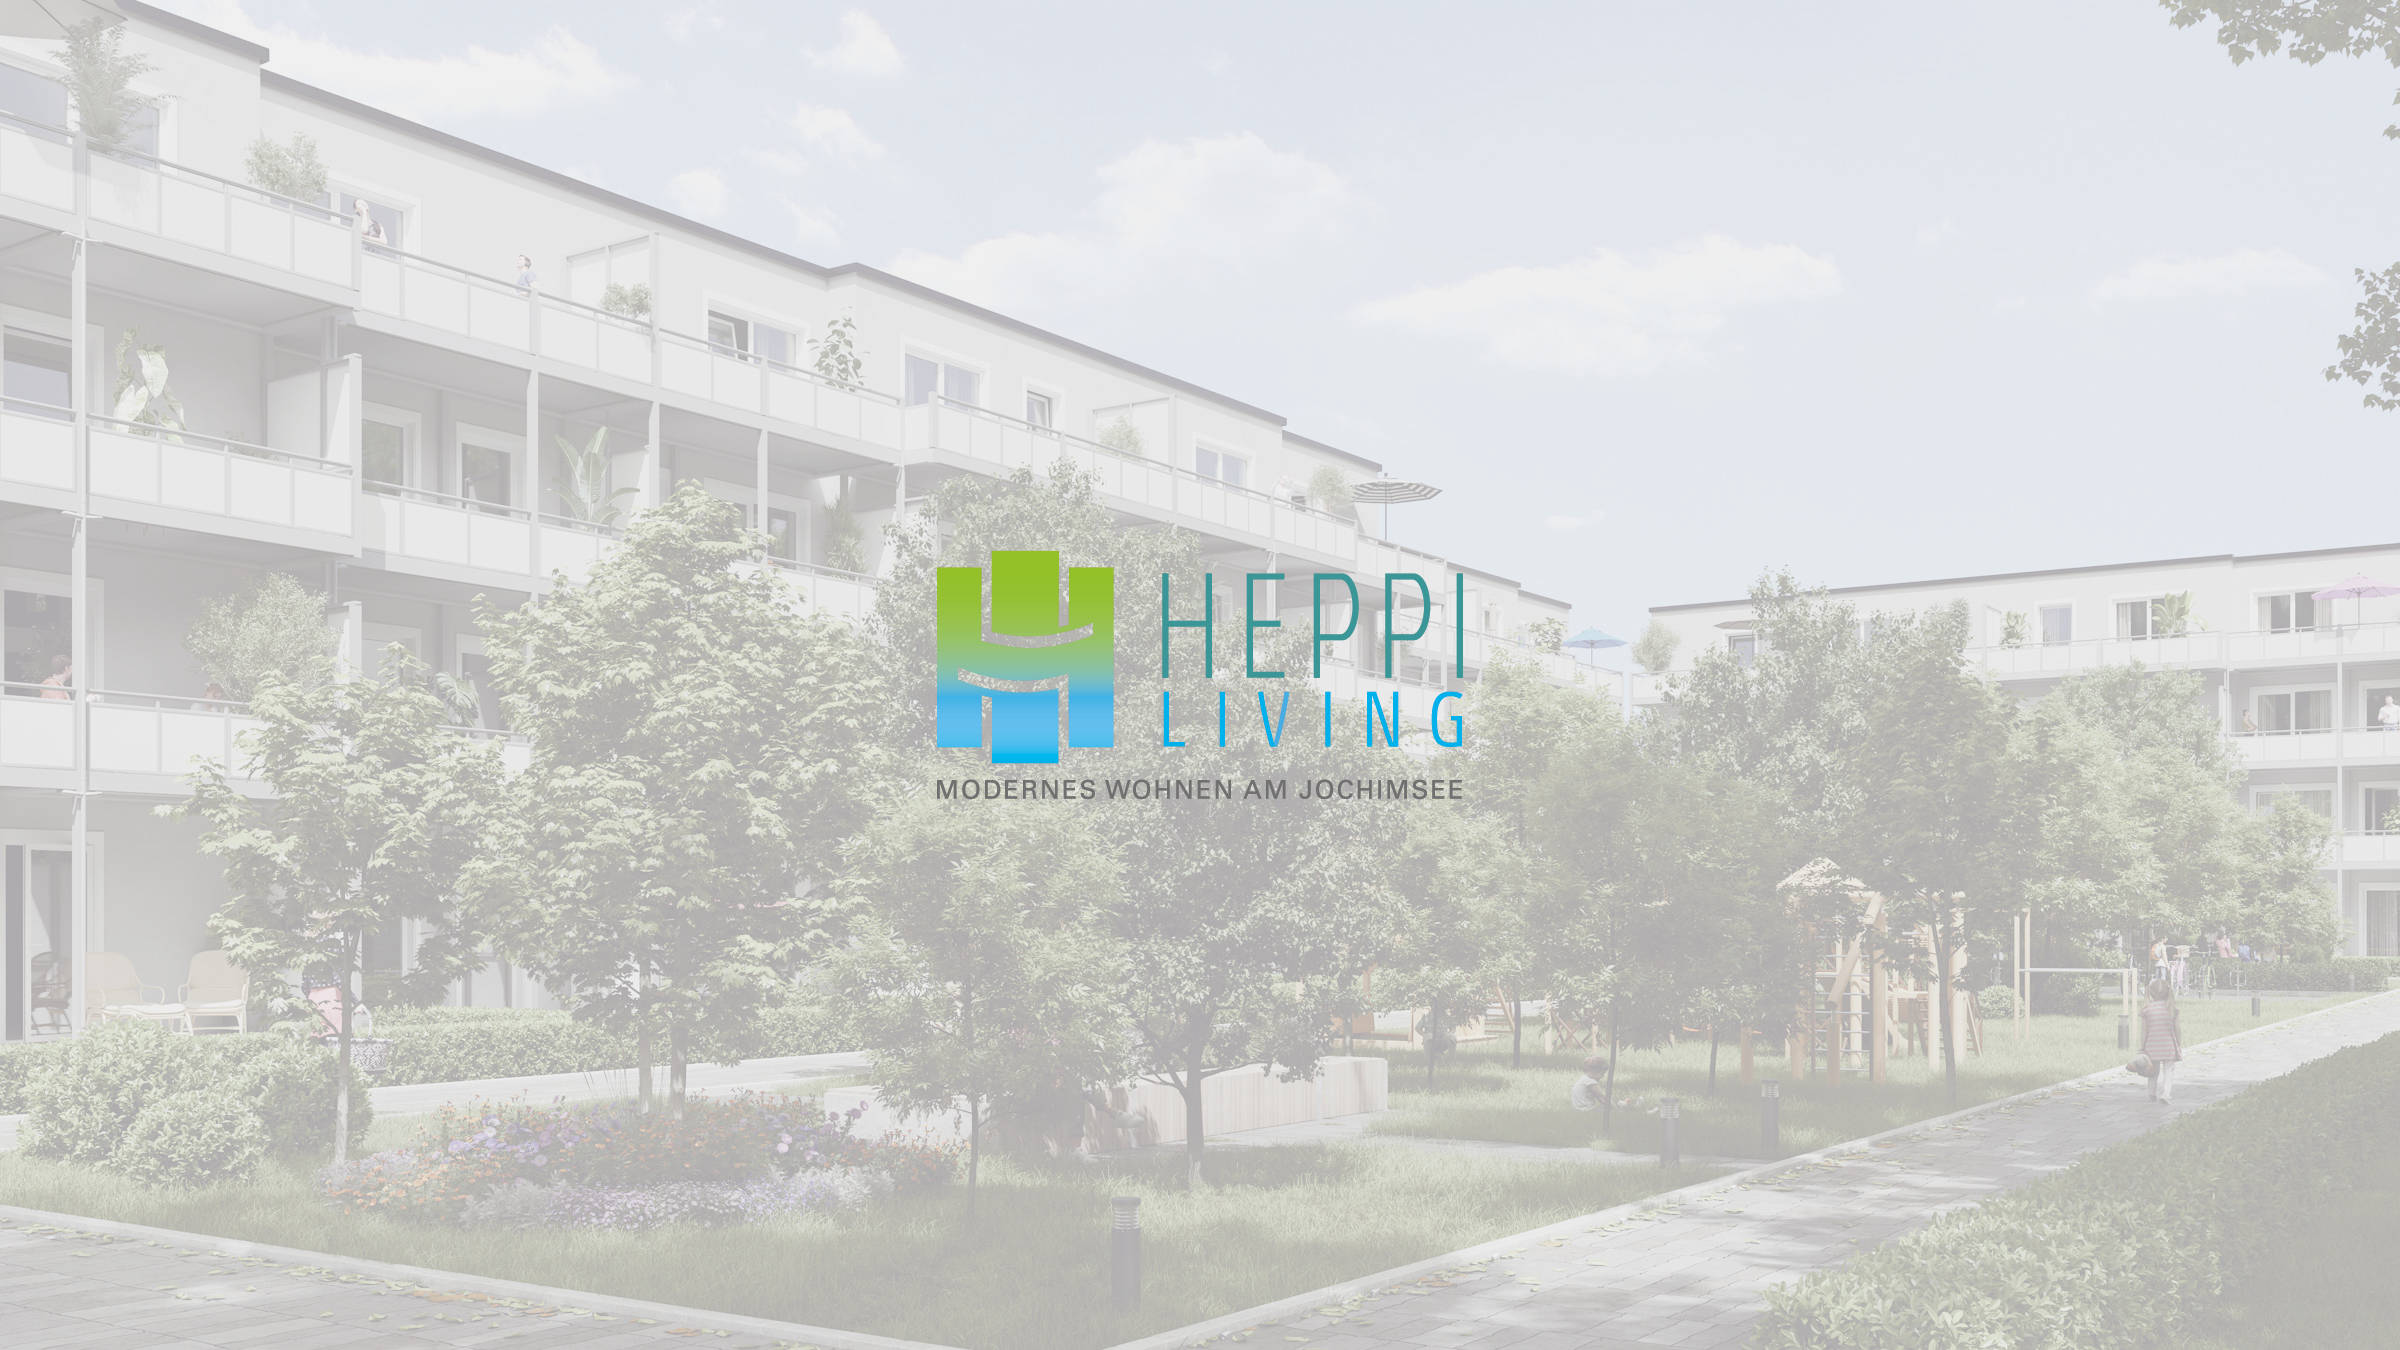 Heppenheim: Heppi Living, Header